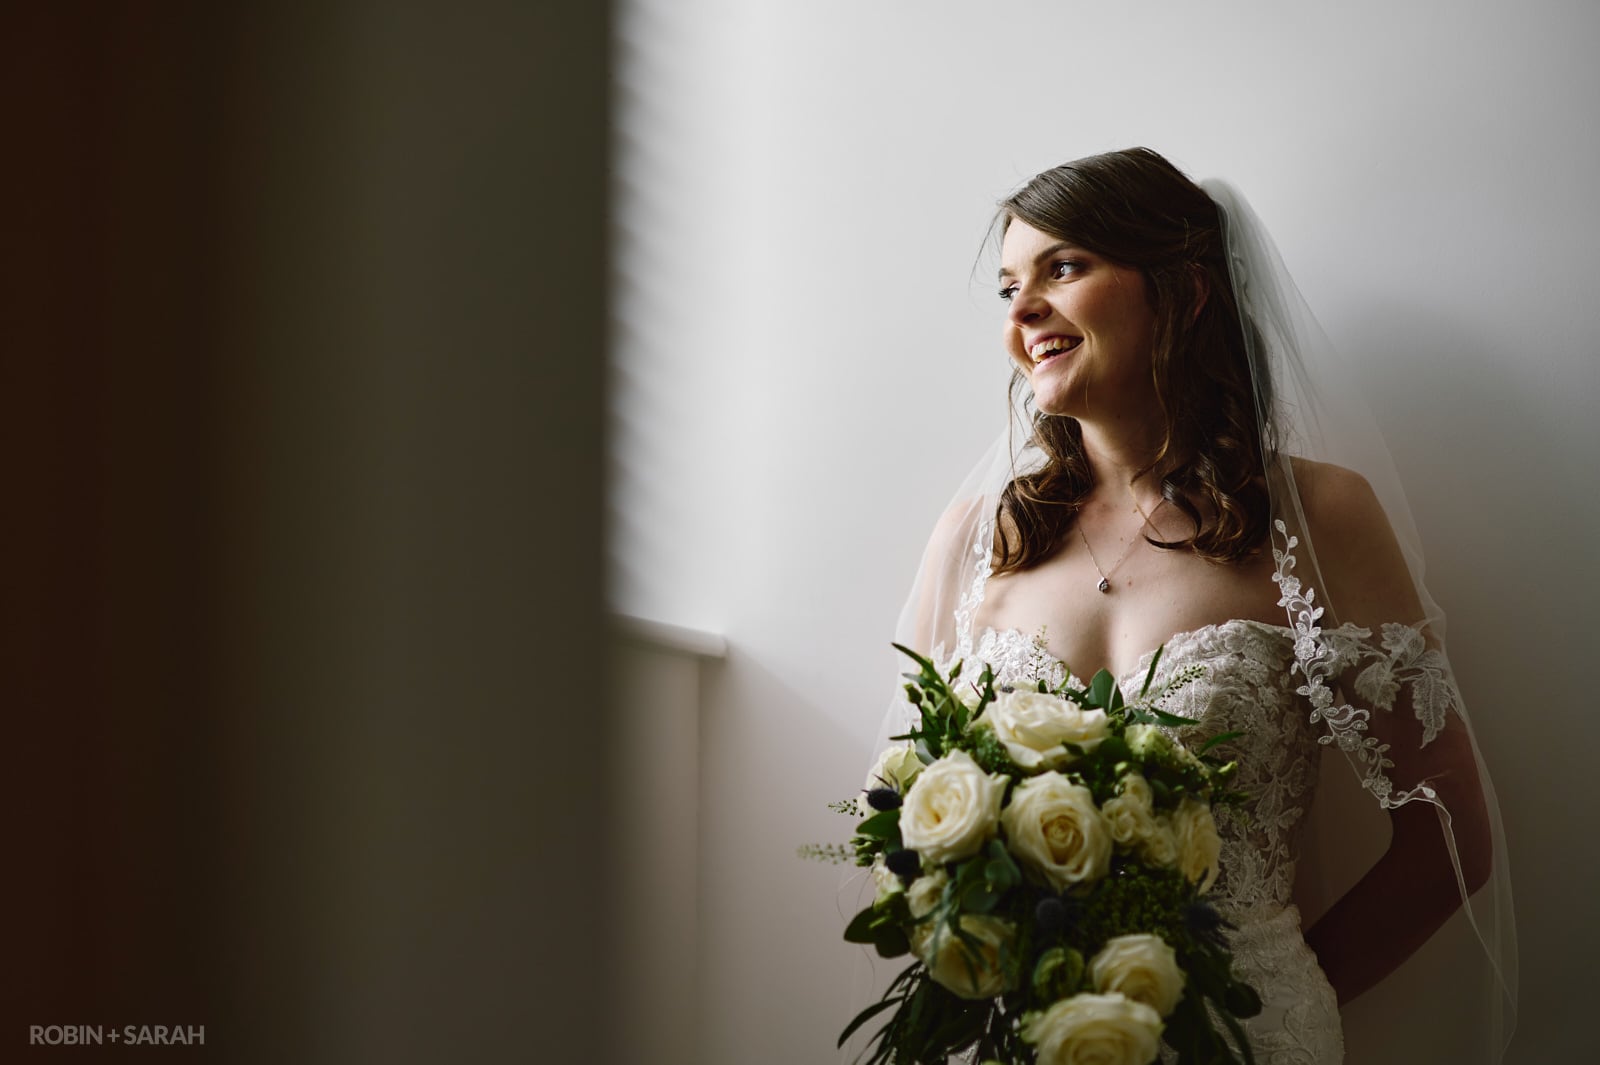 Portrait of young bride in window light